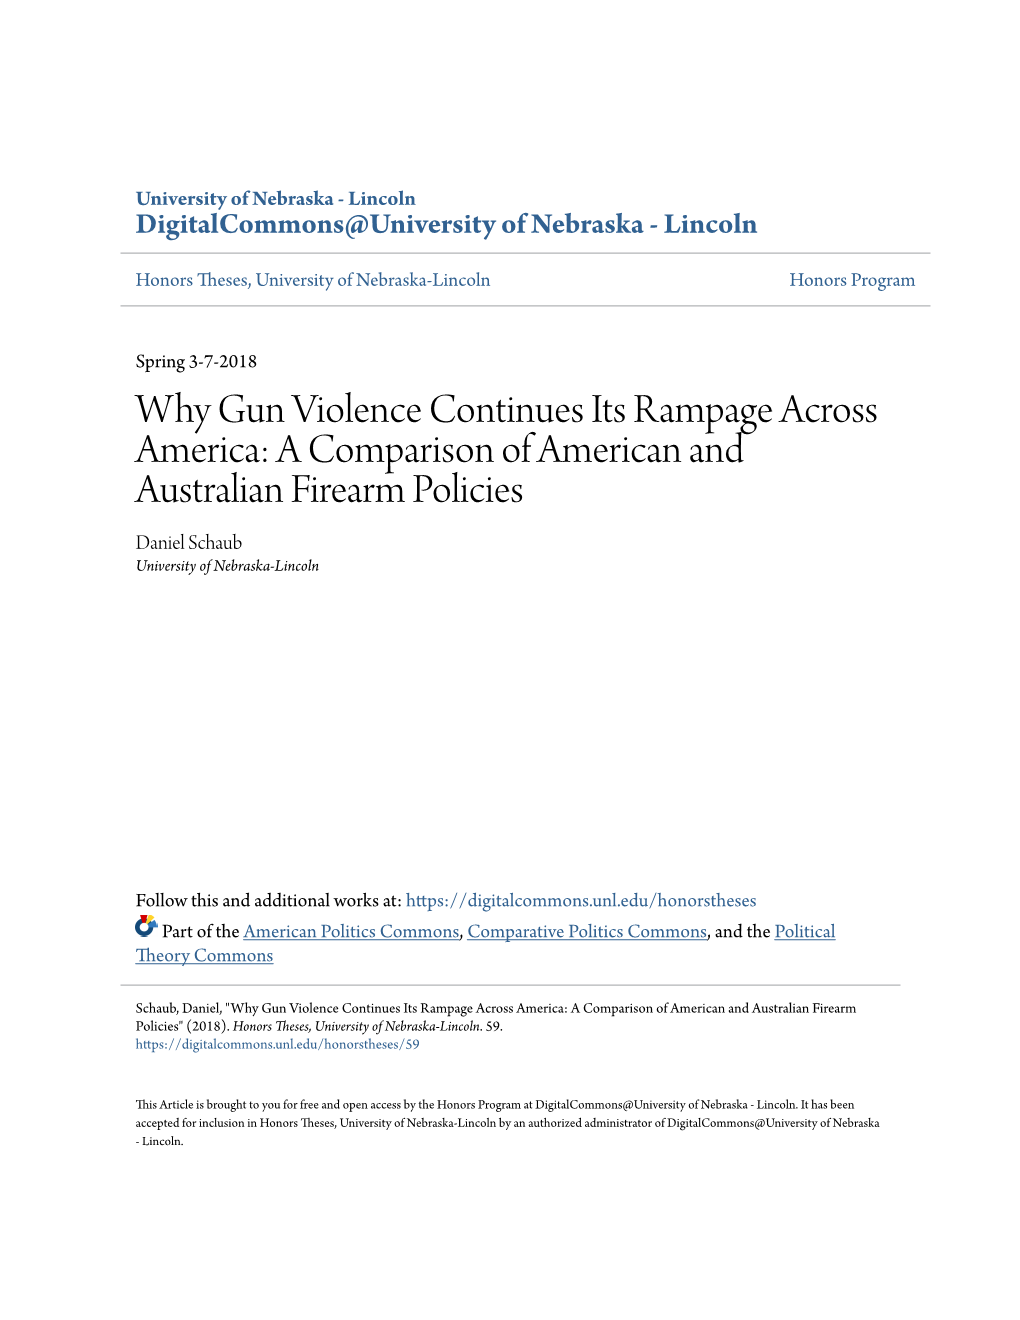 Why Gun Violence Continues Its Rampage Across America: a Comparison of American and Australian Firearm Policies Daniel Schaub University of Nebraska-Lincoln